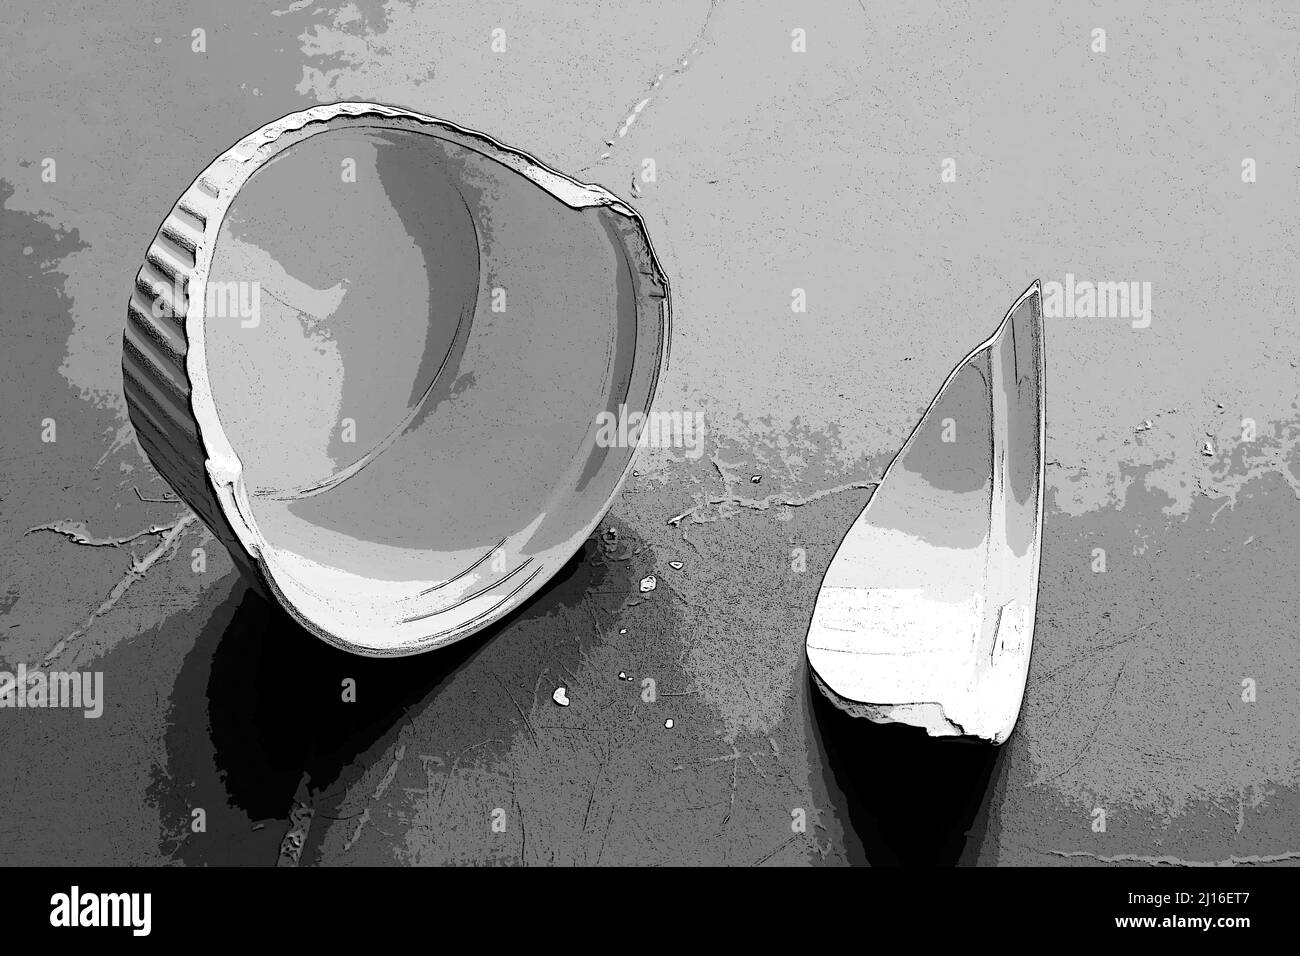 Illustration of a broken white baking bowl with fragments on black kitchen floor Stock Photo